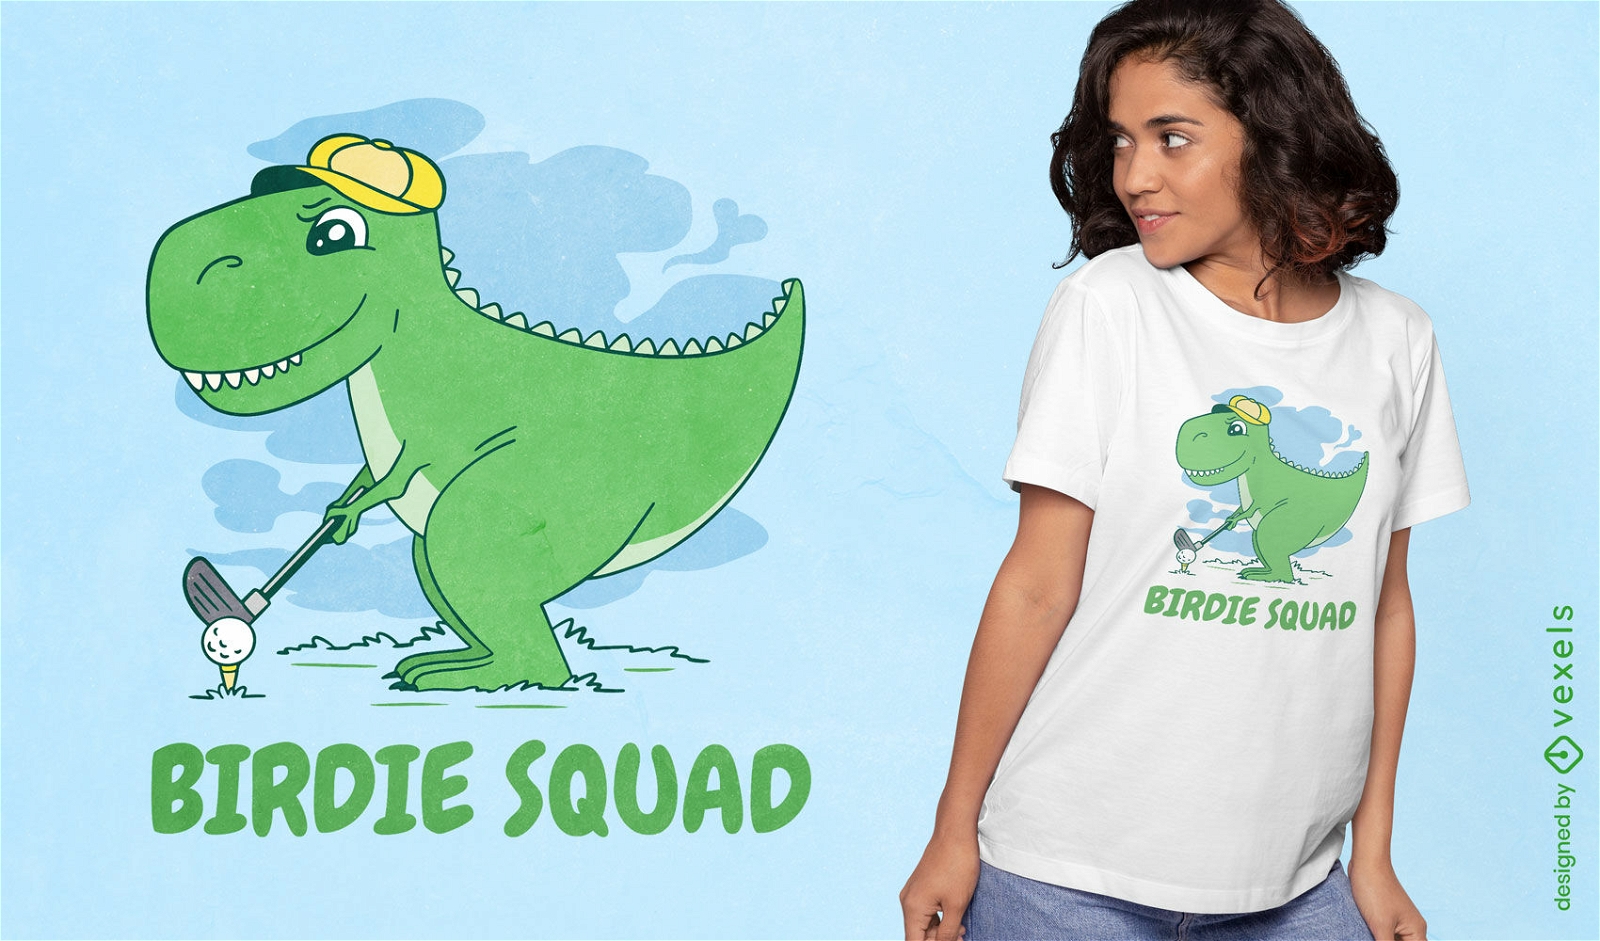 Golf t-rex squad t-shirt design